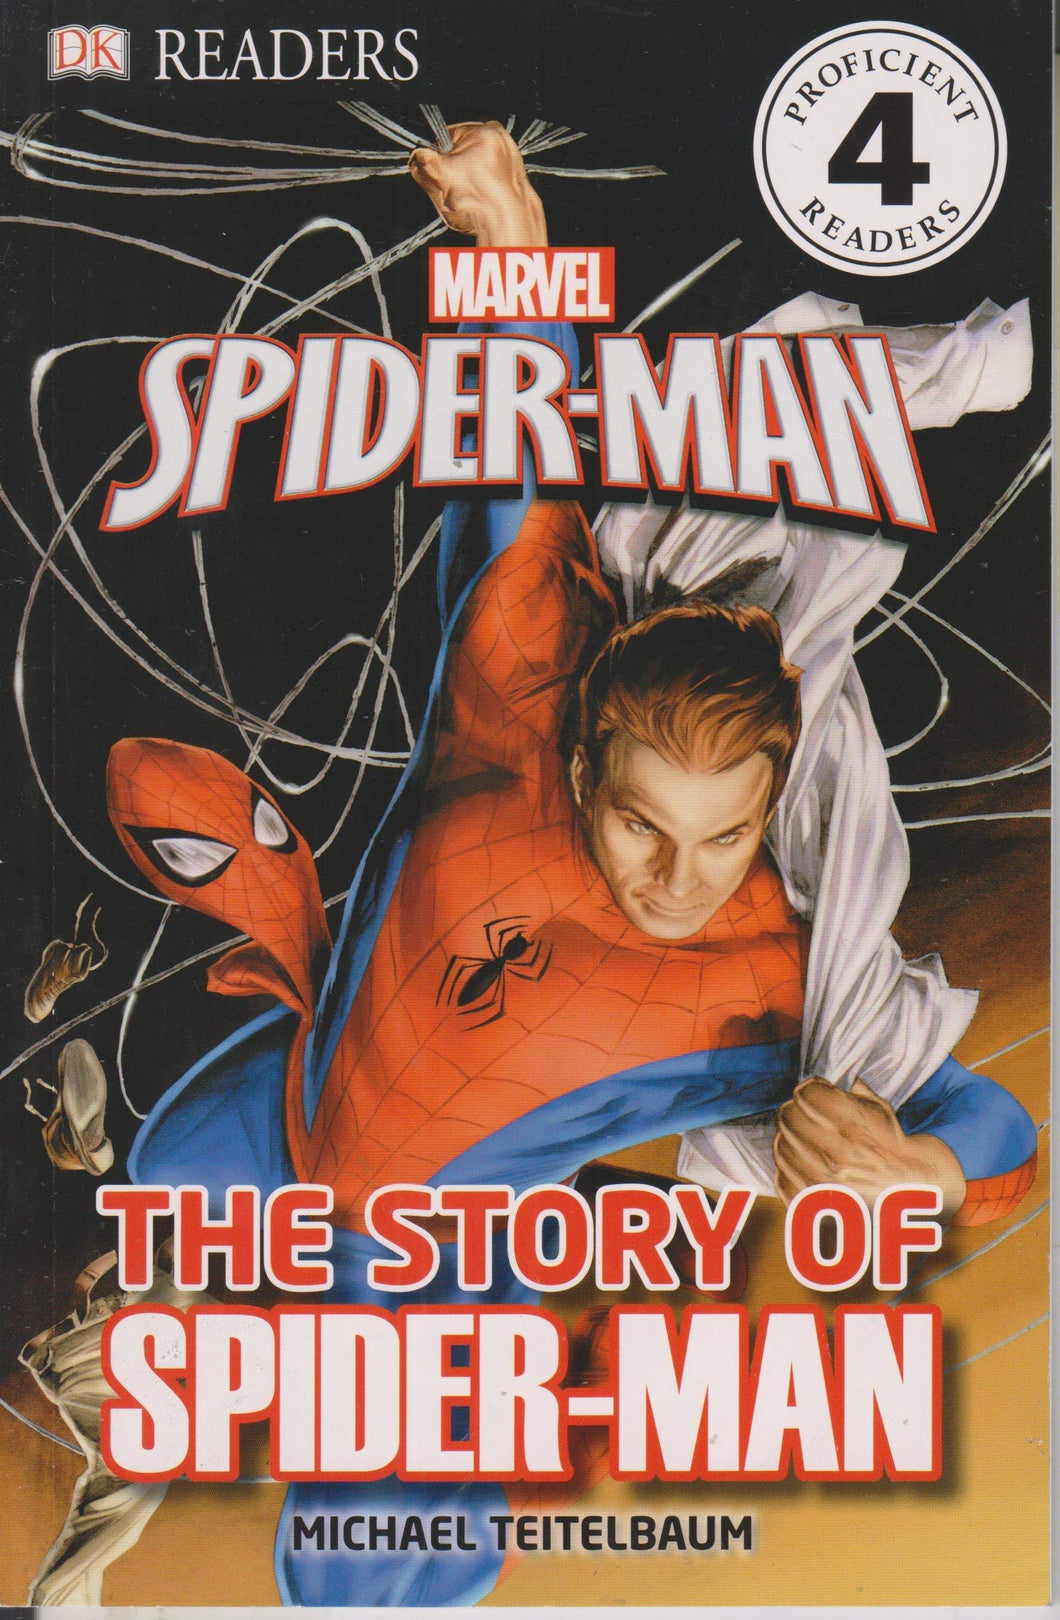 Marvel Spider-Man - The Story of Spider-Man (DK Readers Level 4)